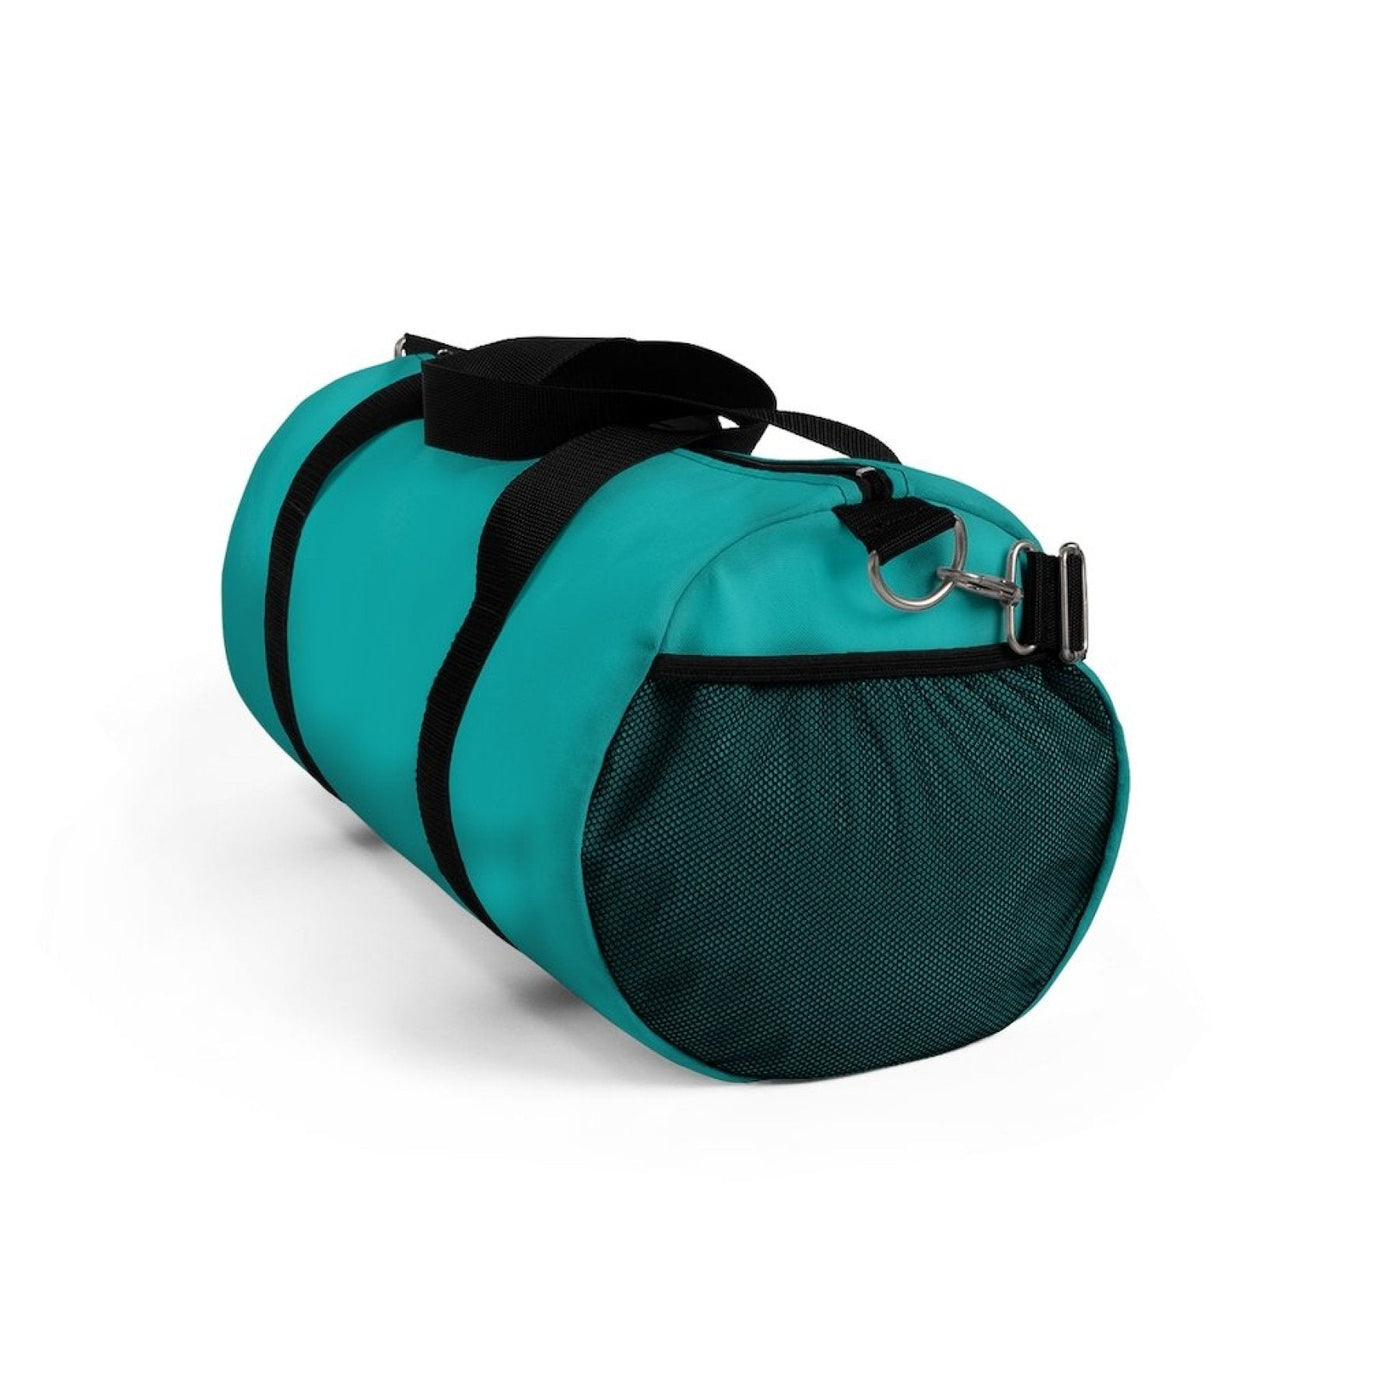 Duffel Bag Carry On Luggage Teal Green - Bags | Duffel Bags